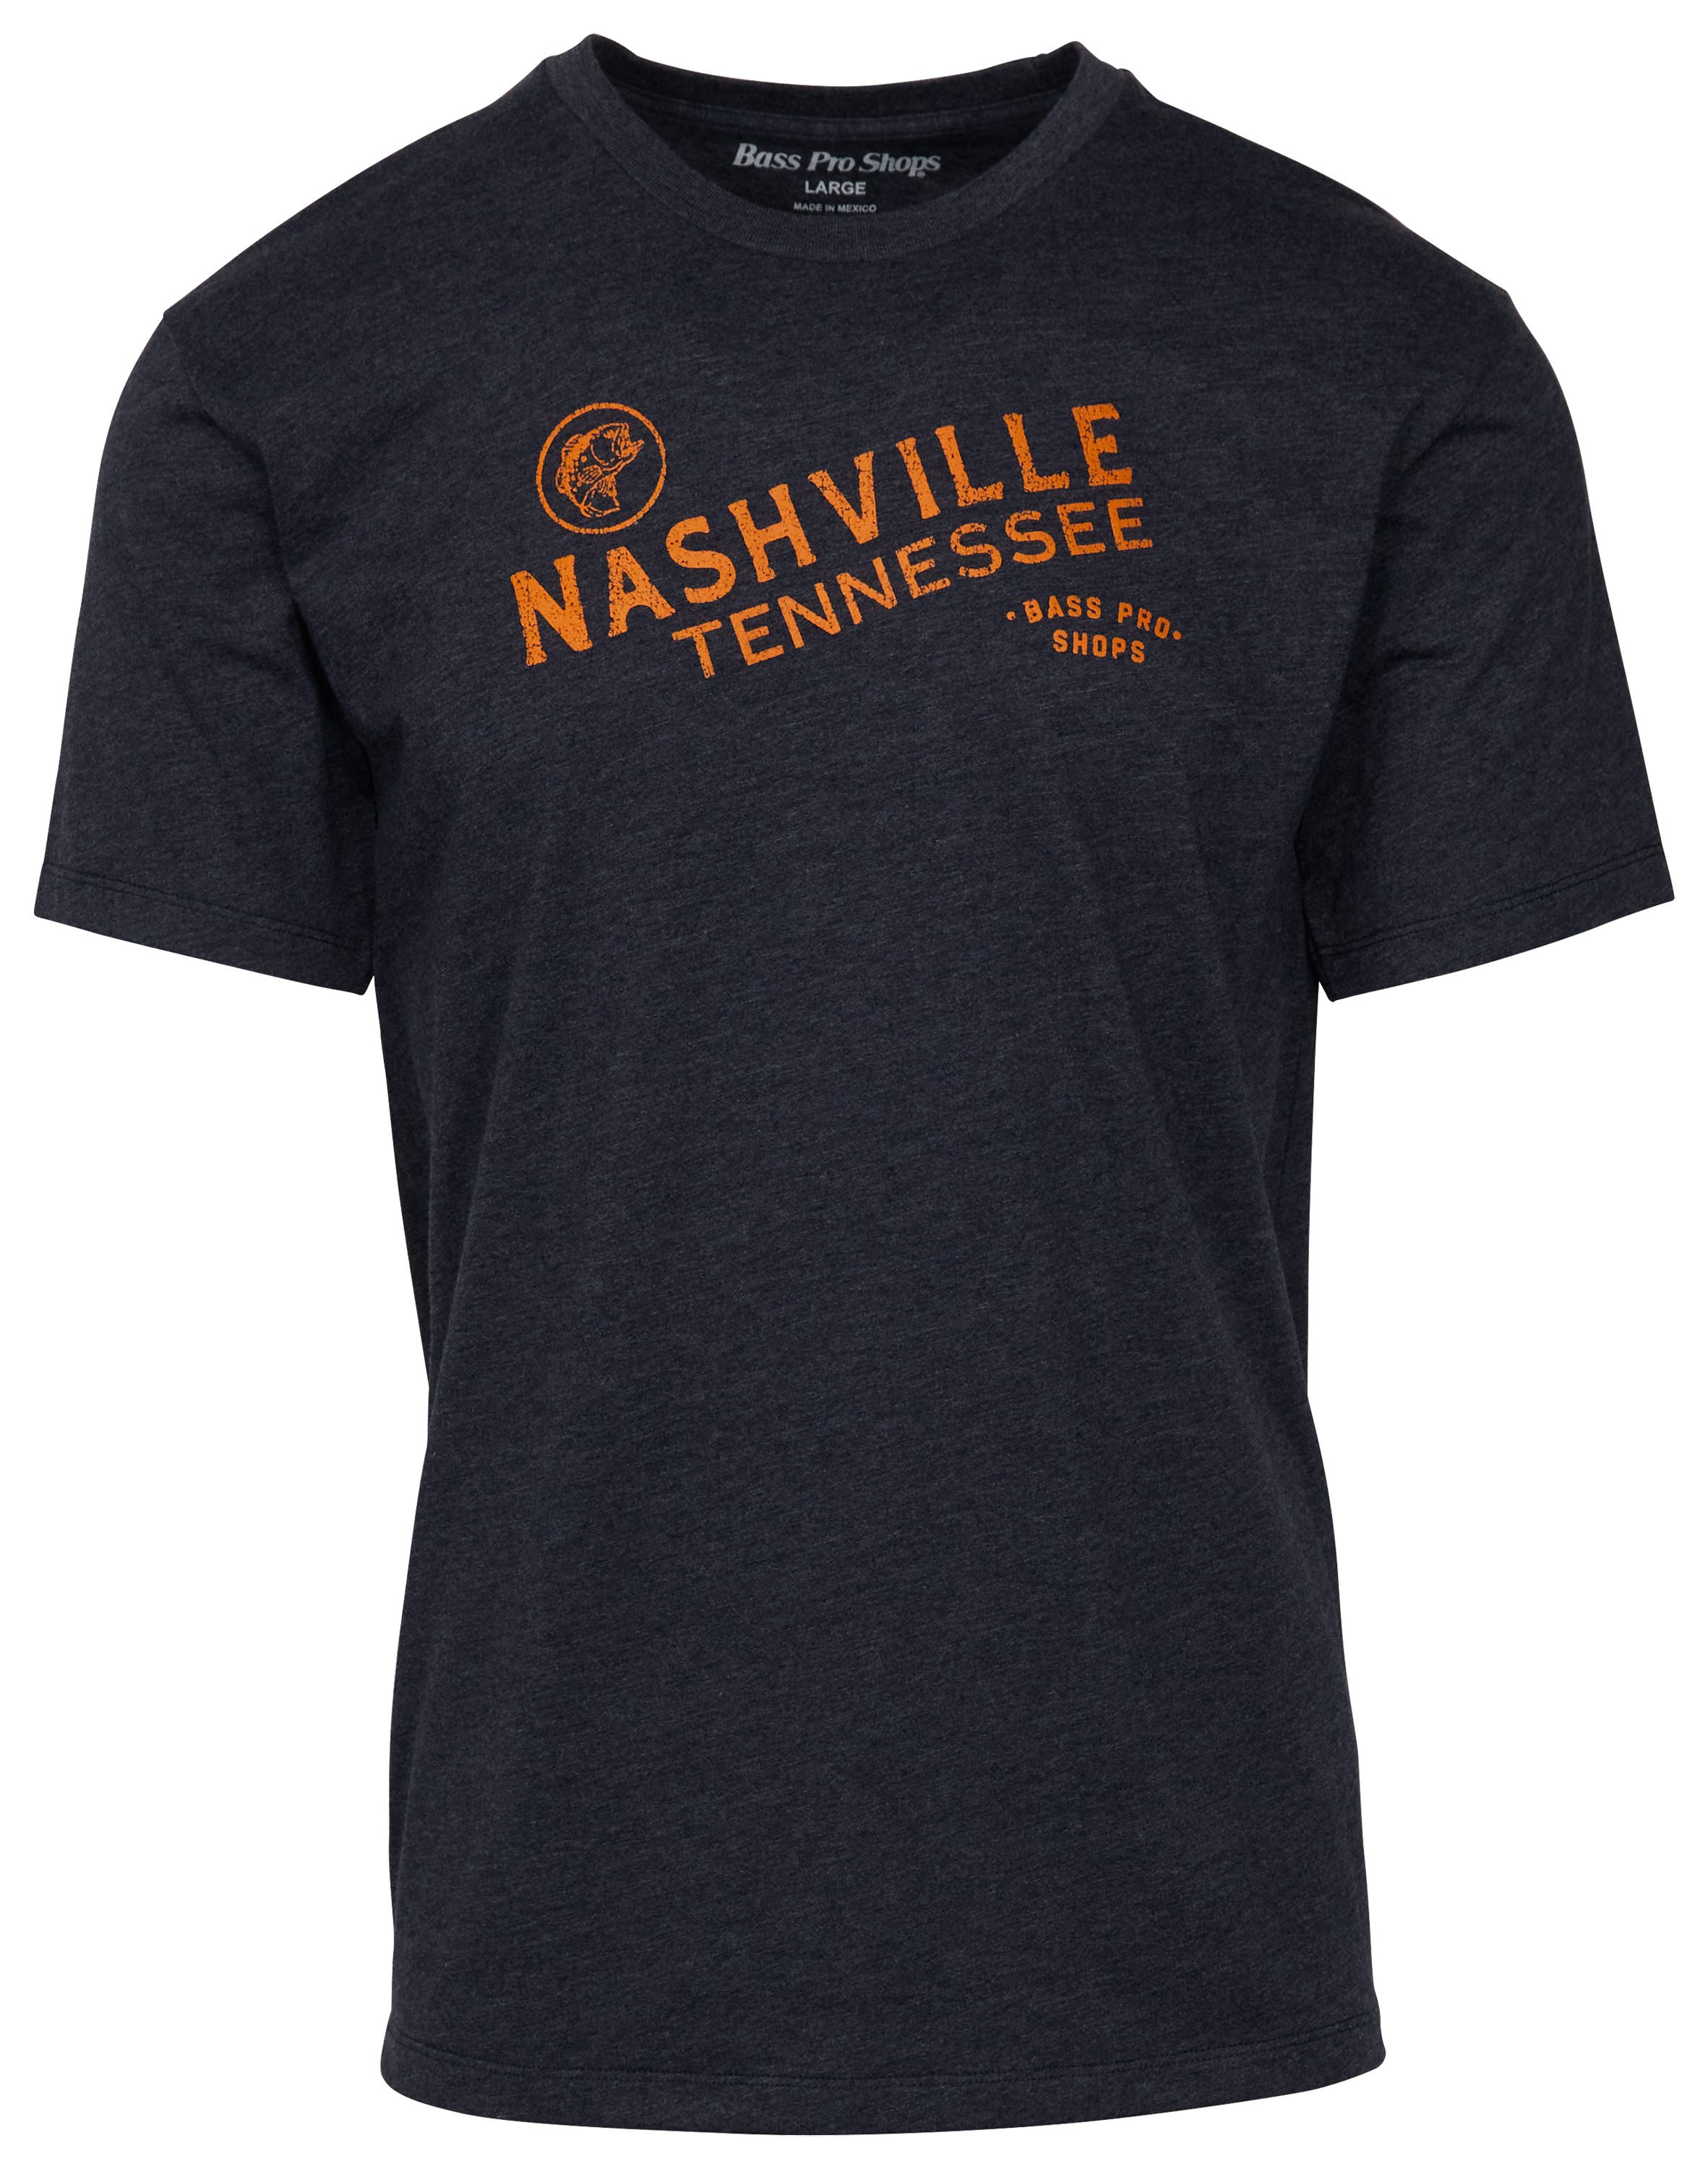 Bass Pro Shops Nashville Graphic Short-Sleeve T-Shirt for Men